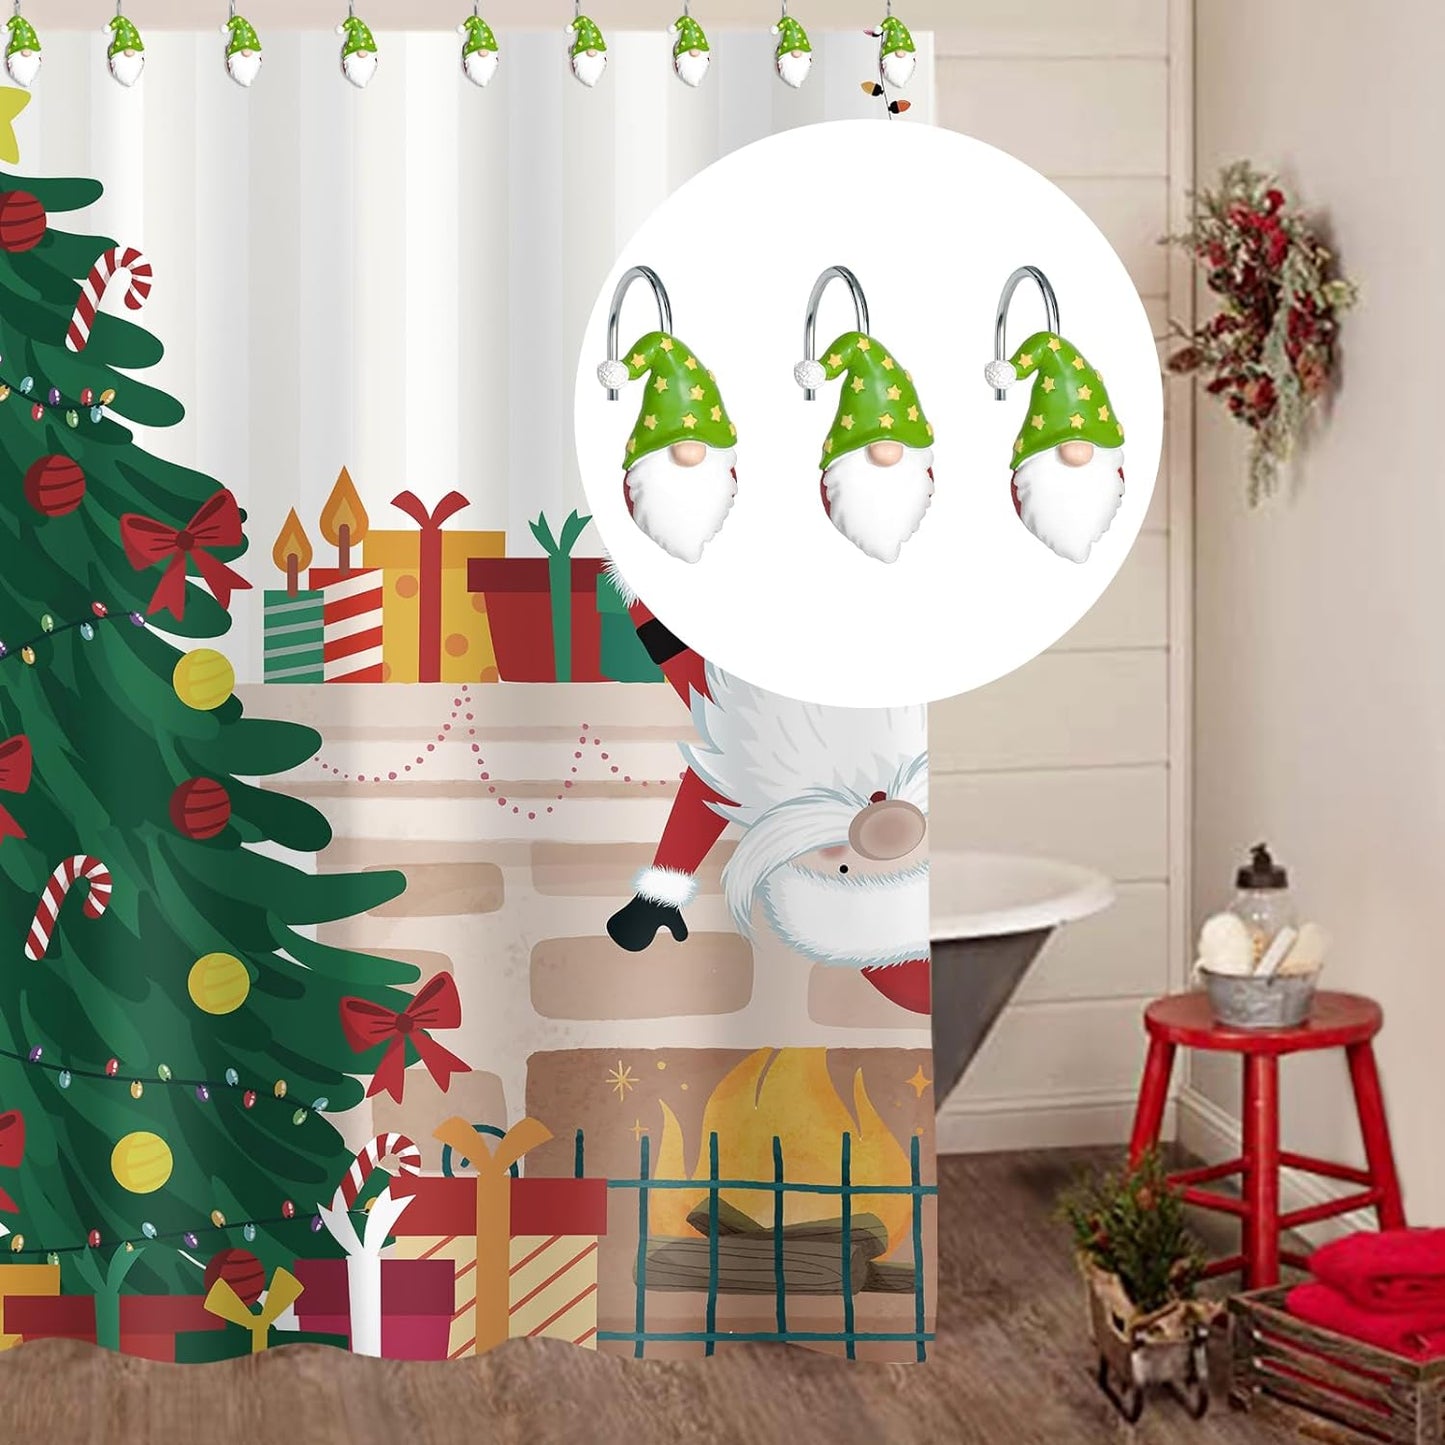 Sunlit Christmas Shower Curtain Hooks, Gnome Shower Curtain Rings, Hand Painted Resin Christmas Decor, Winter Bathroom Decoration, Black Top Hat, Set of 12